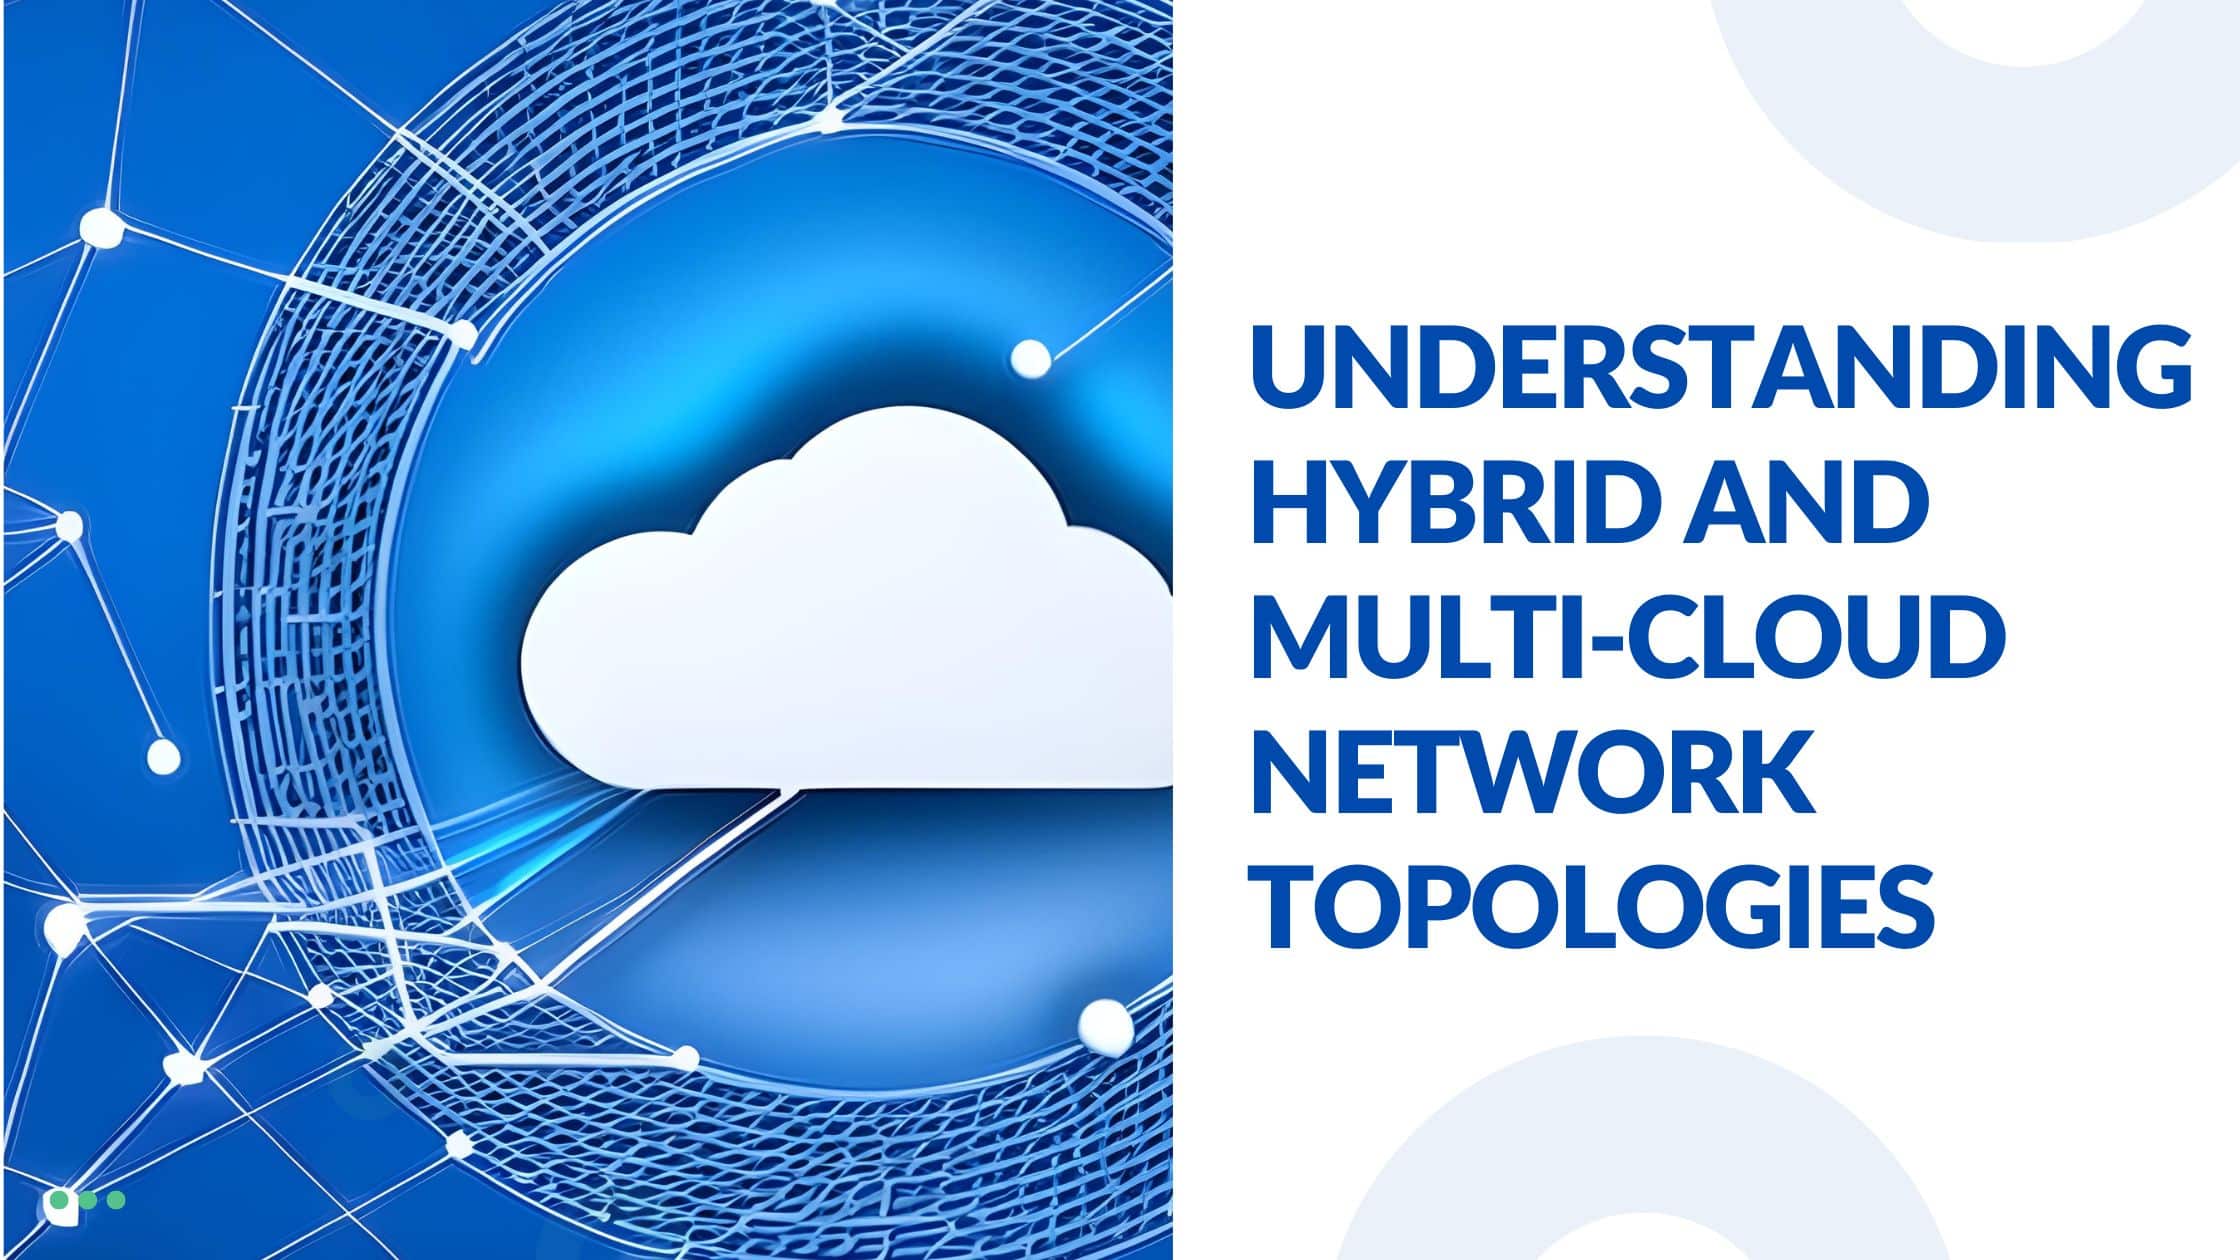 Understanding hybrid and multi-cloud network topologies